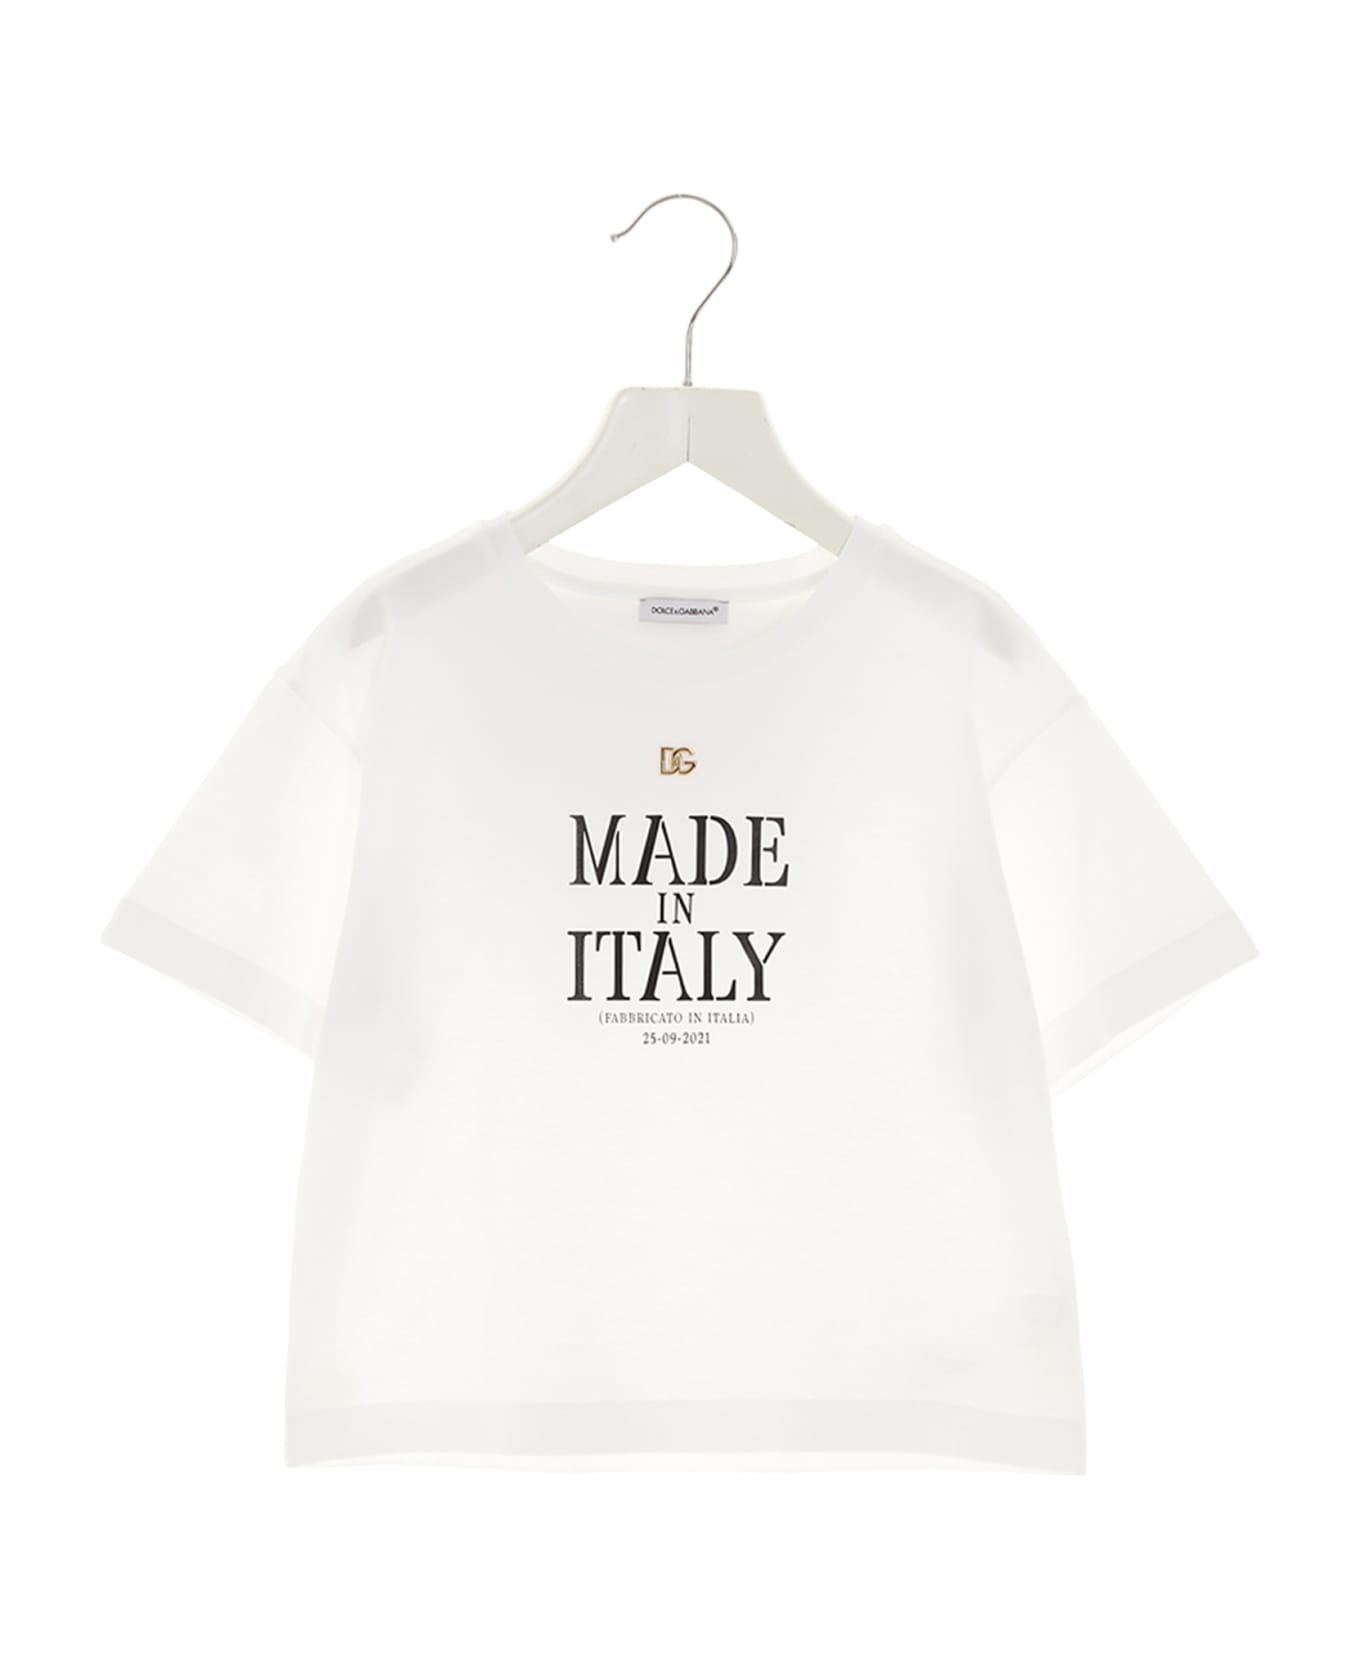 Dolce & Gabbana Logo Print T-shirt - White